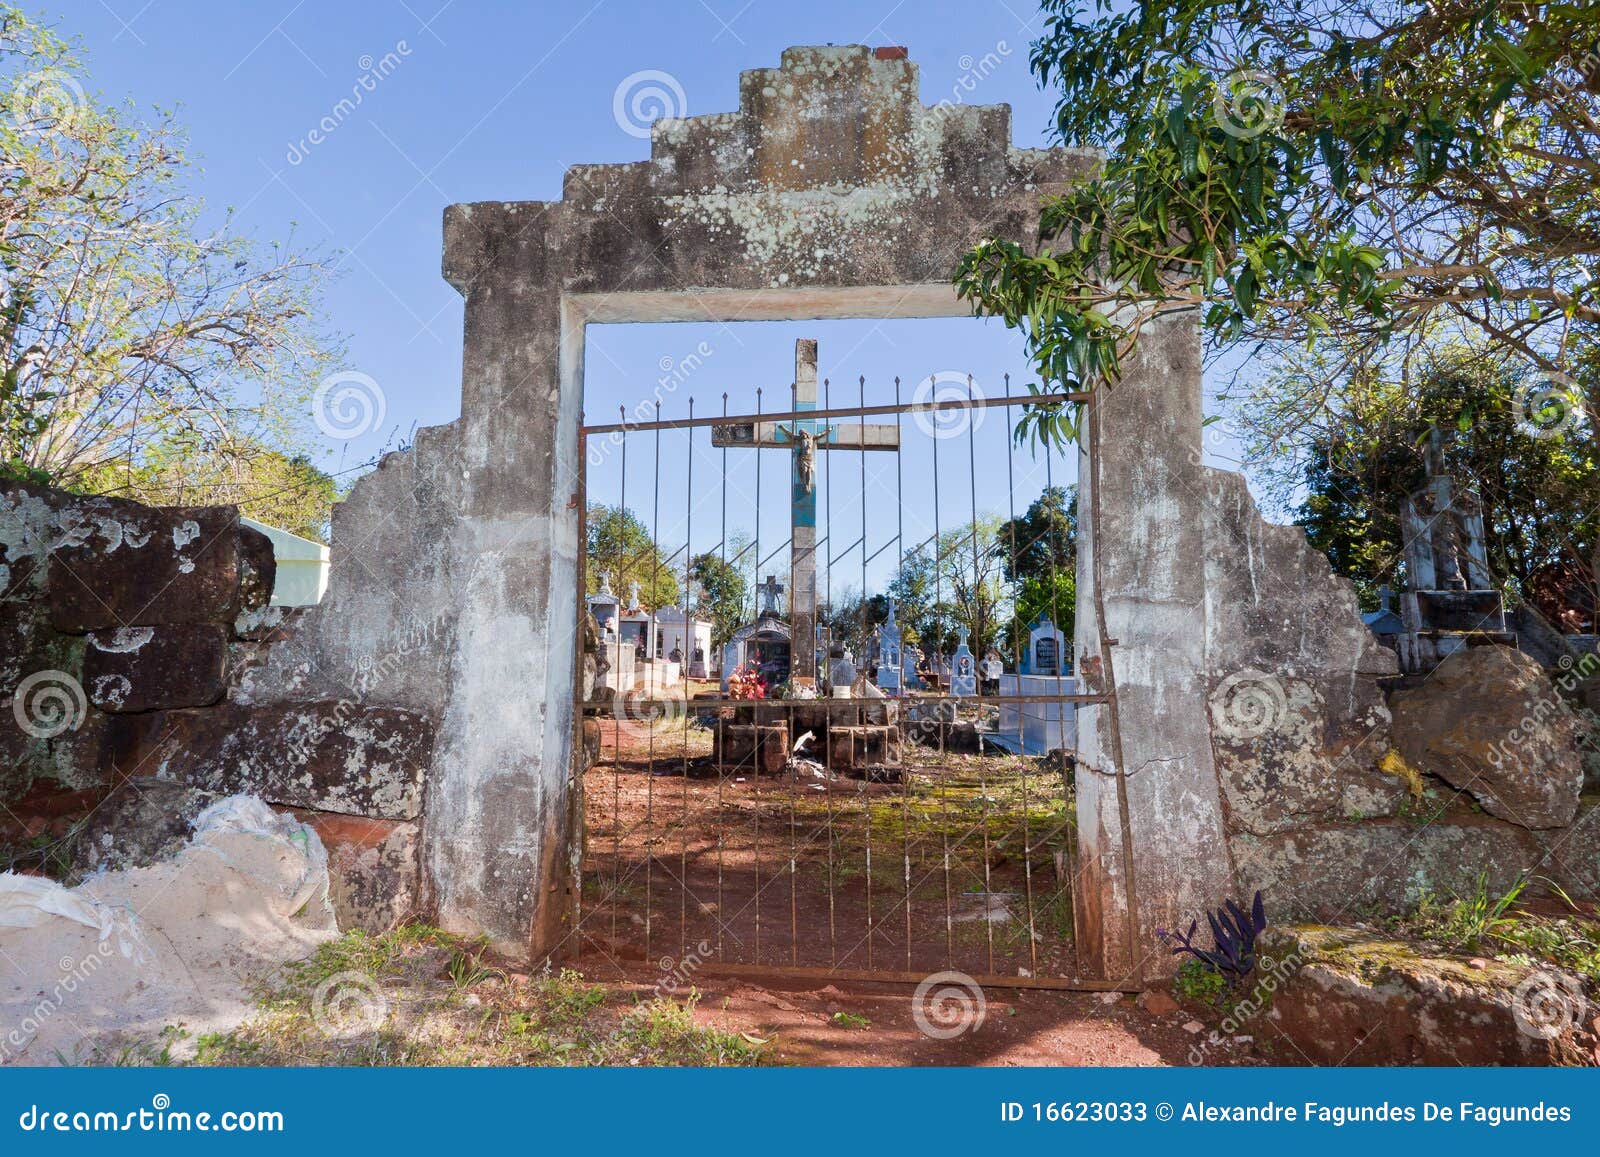 sao joao baptista ruins cemetery